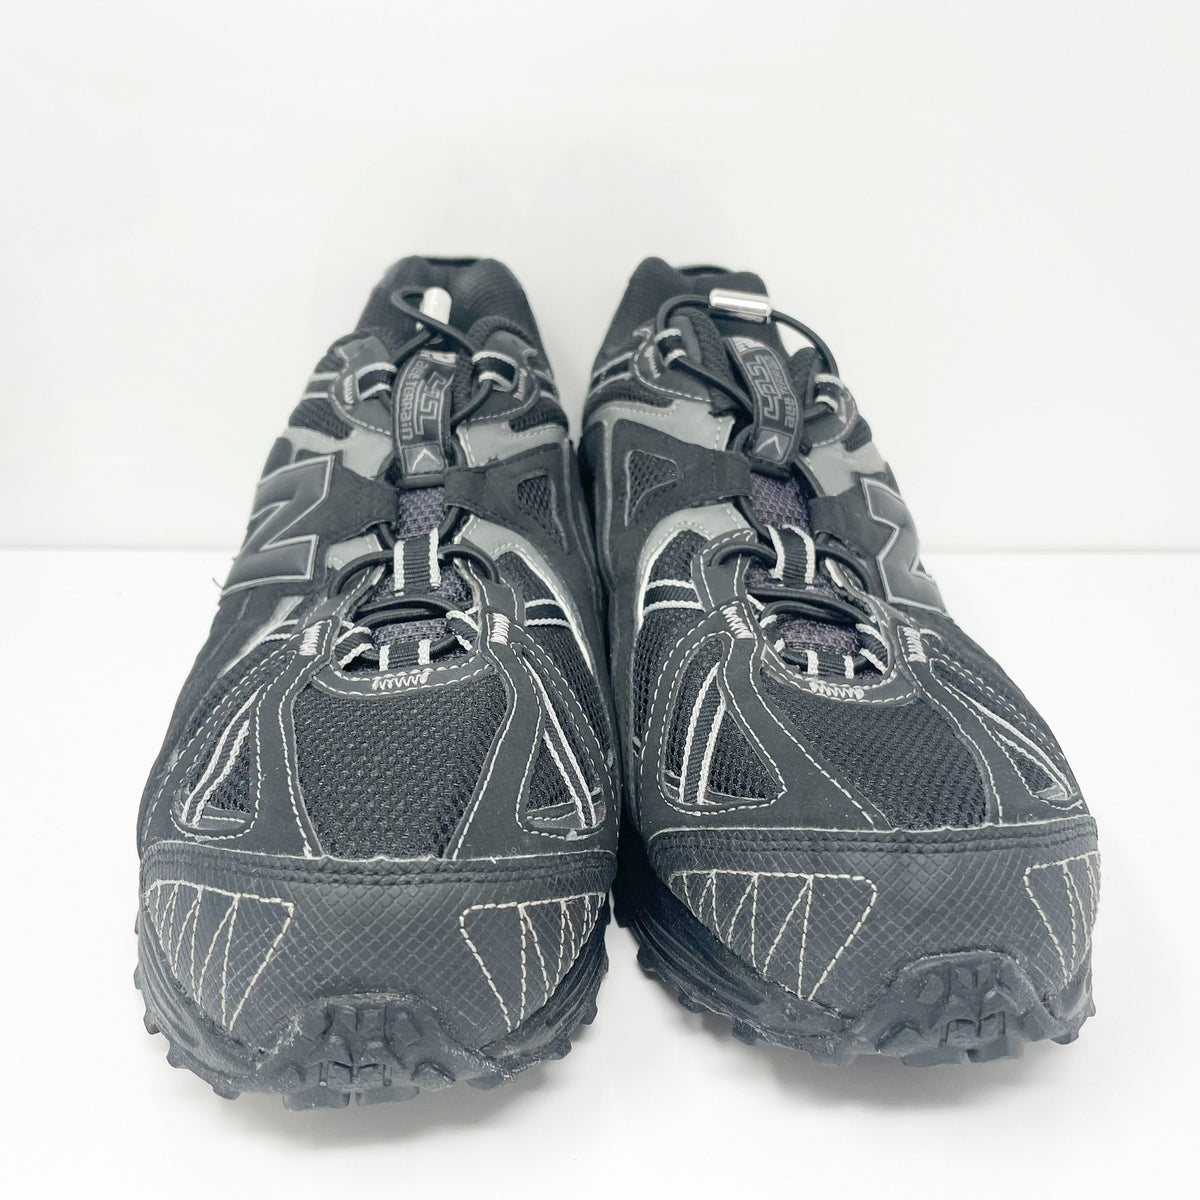 New Balance Mens 411 All Terrain MT411BG Black Running Shoes Sneakers ...